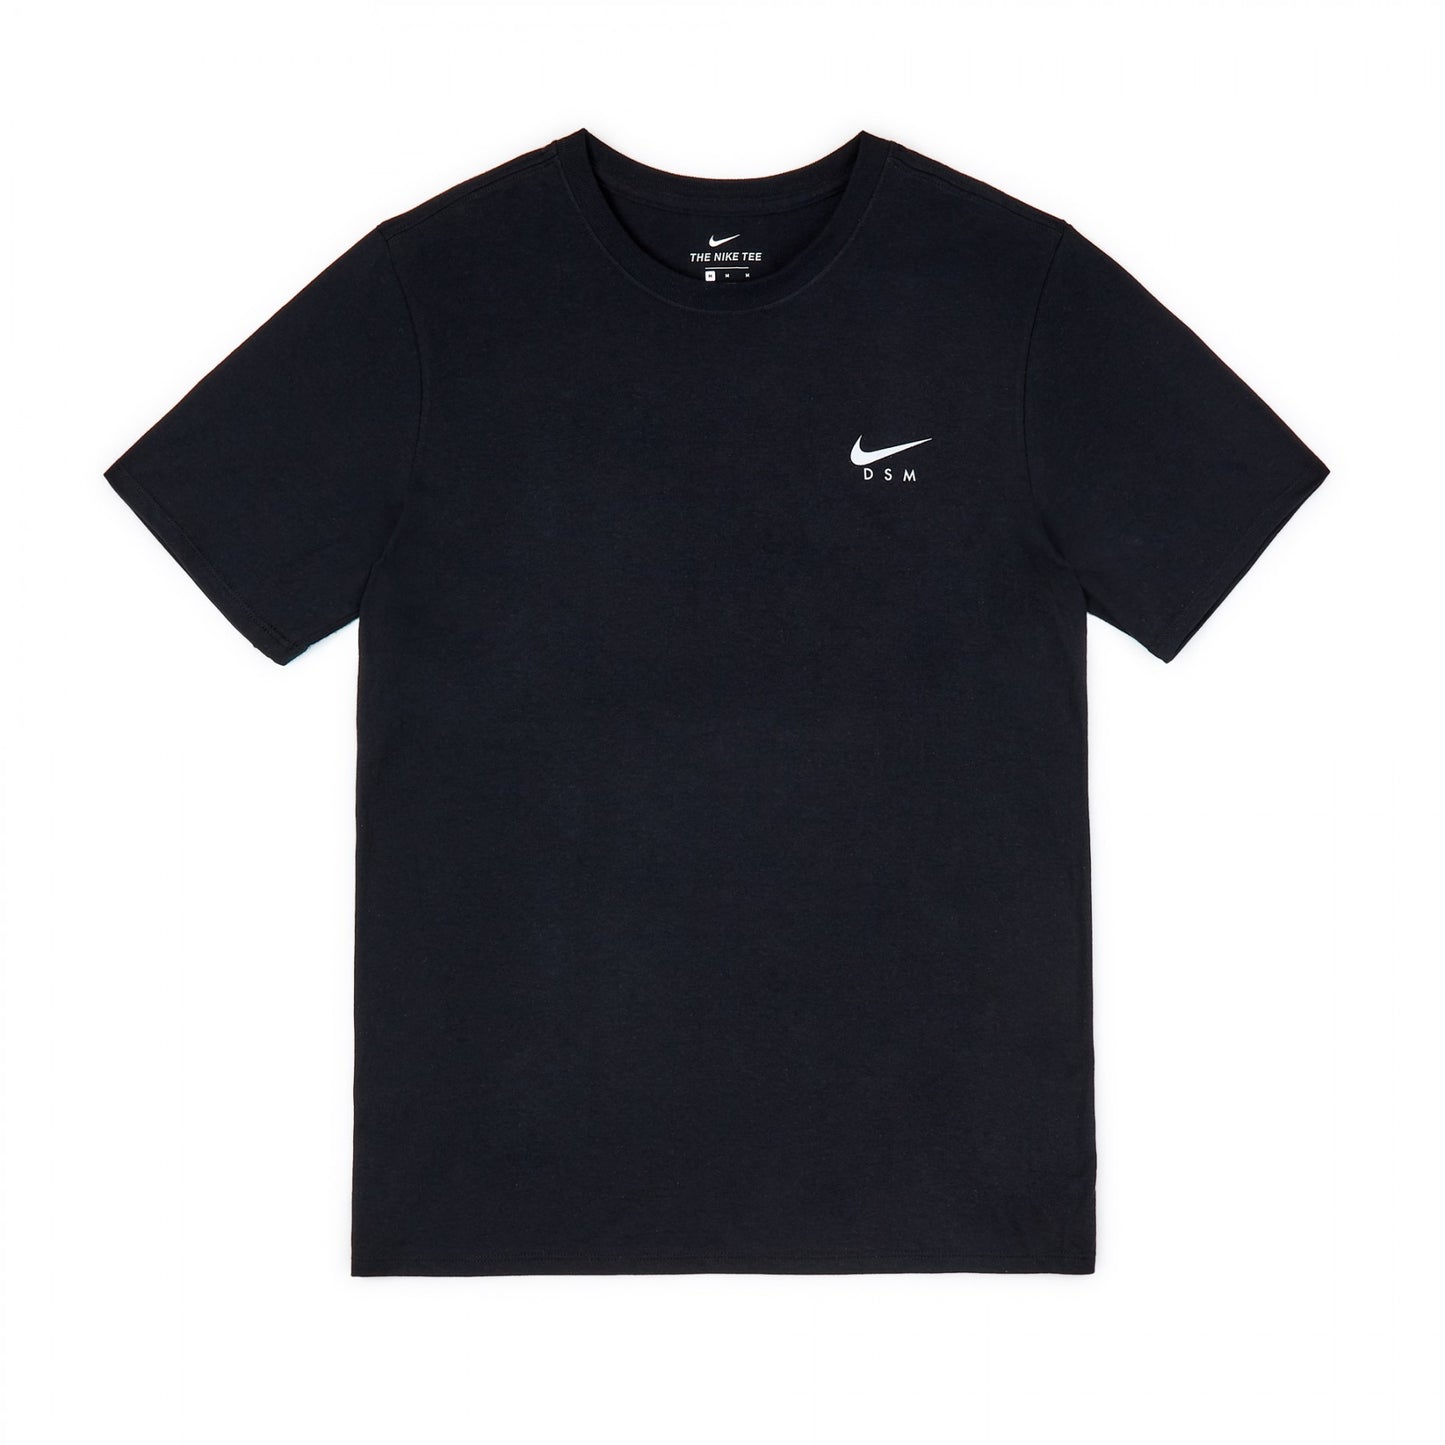 Nike x DSM - Year of the Rat 'Rat Pack' T-Shirt (Black)